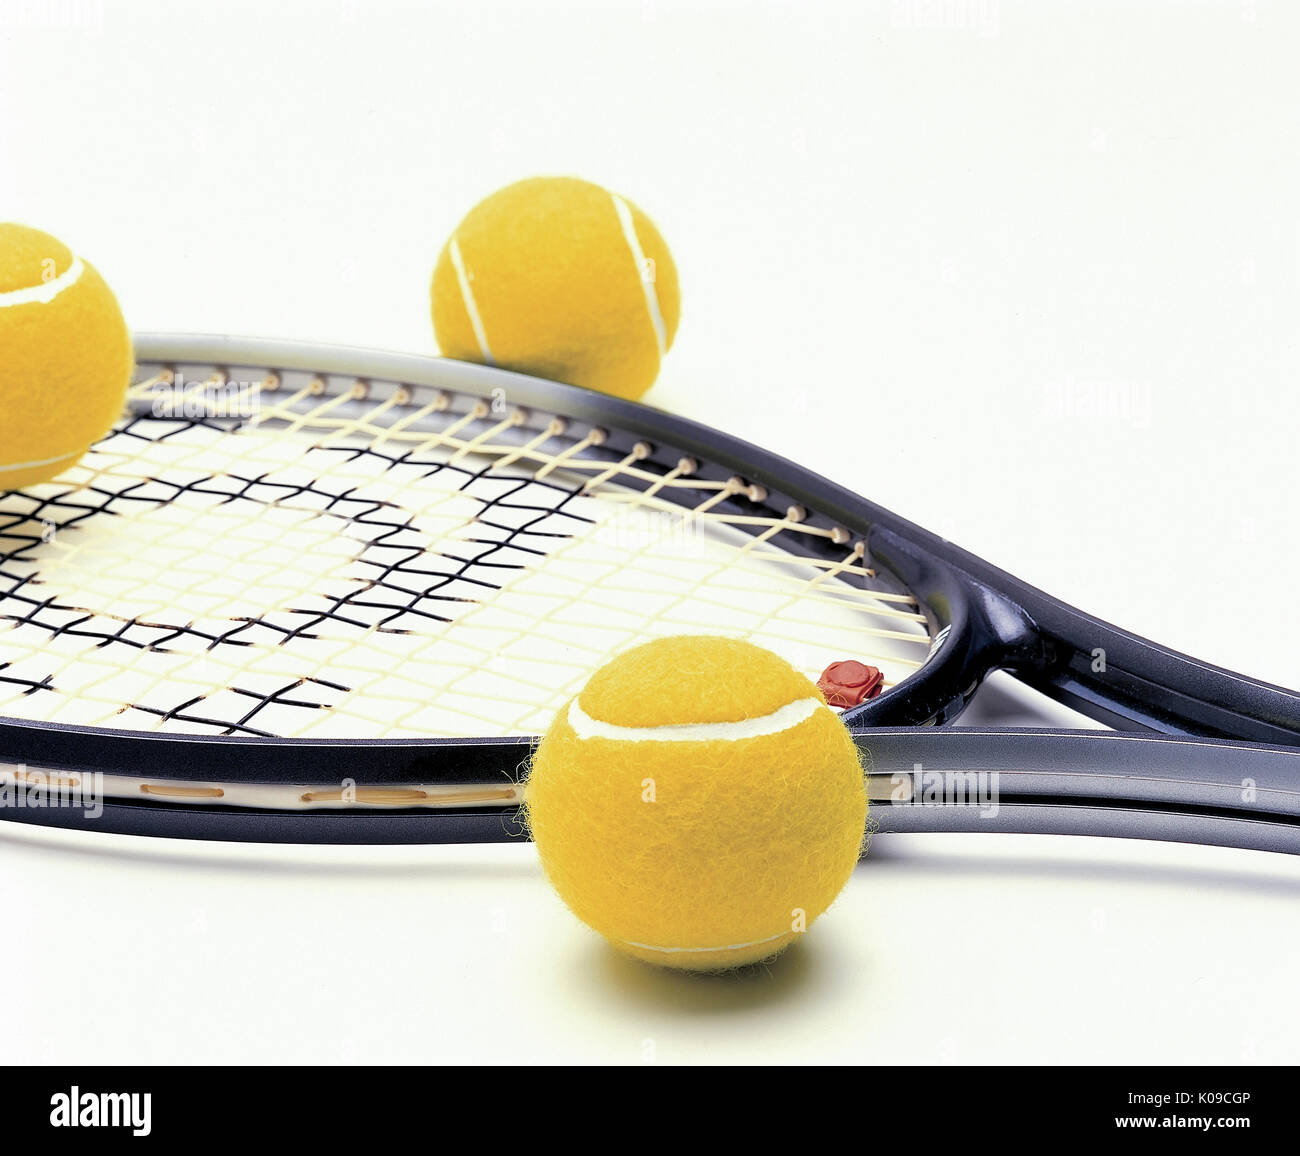 Tenis racchetta giallo e palle da tennis Foto Stock